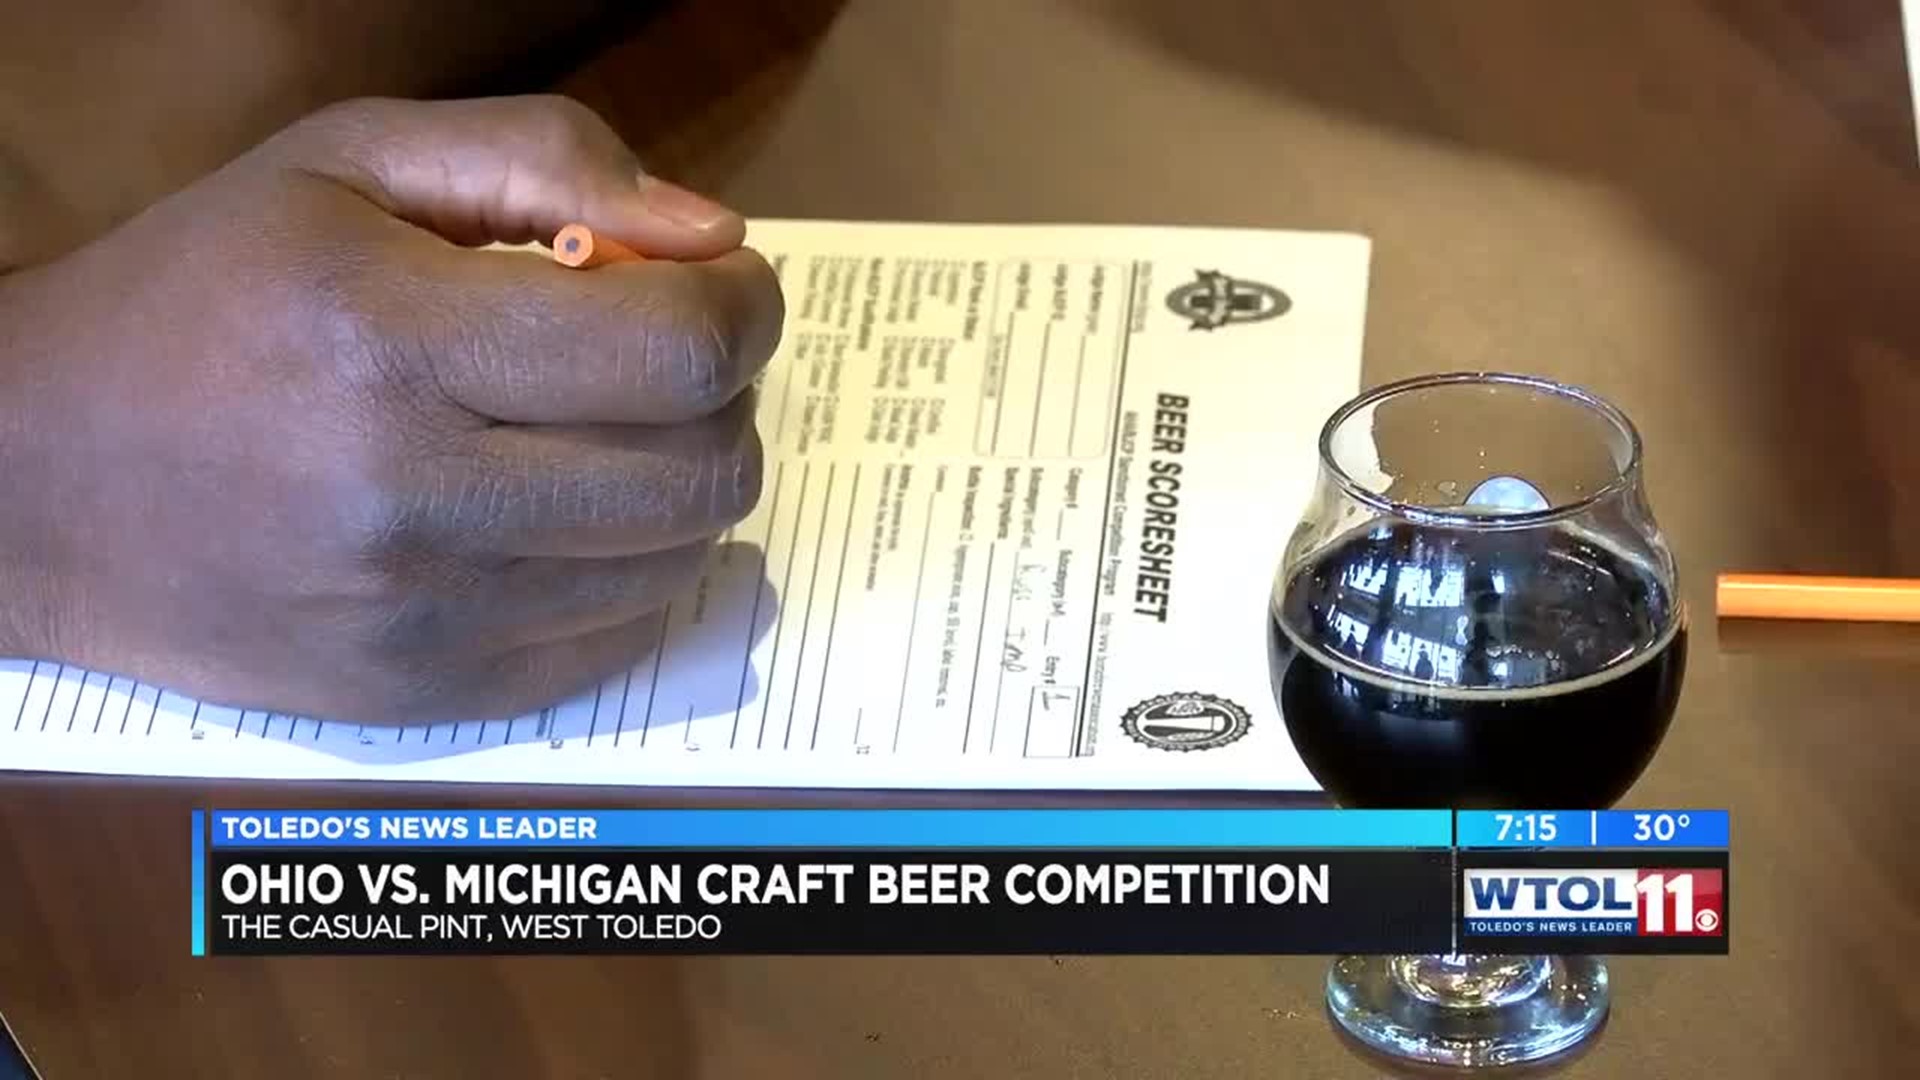 Ohio vs. Michigan craft beer competition